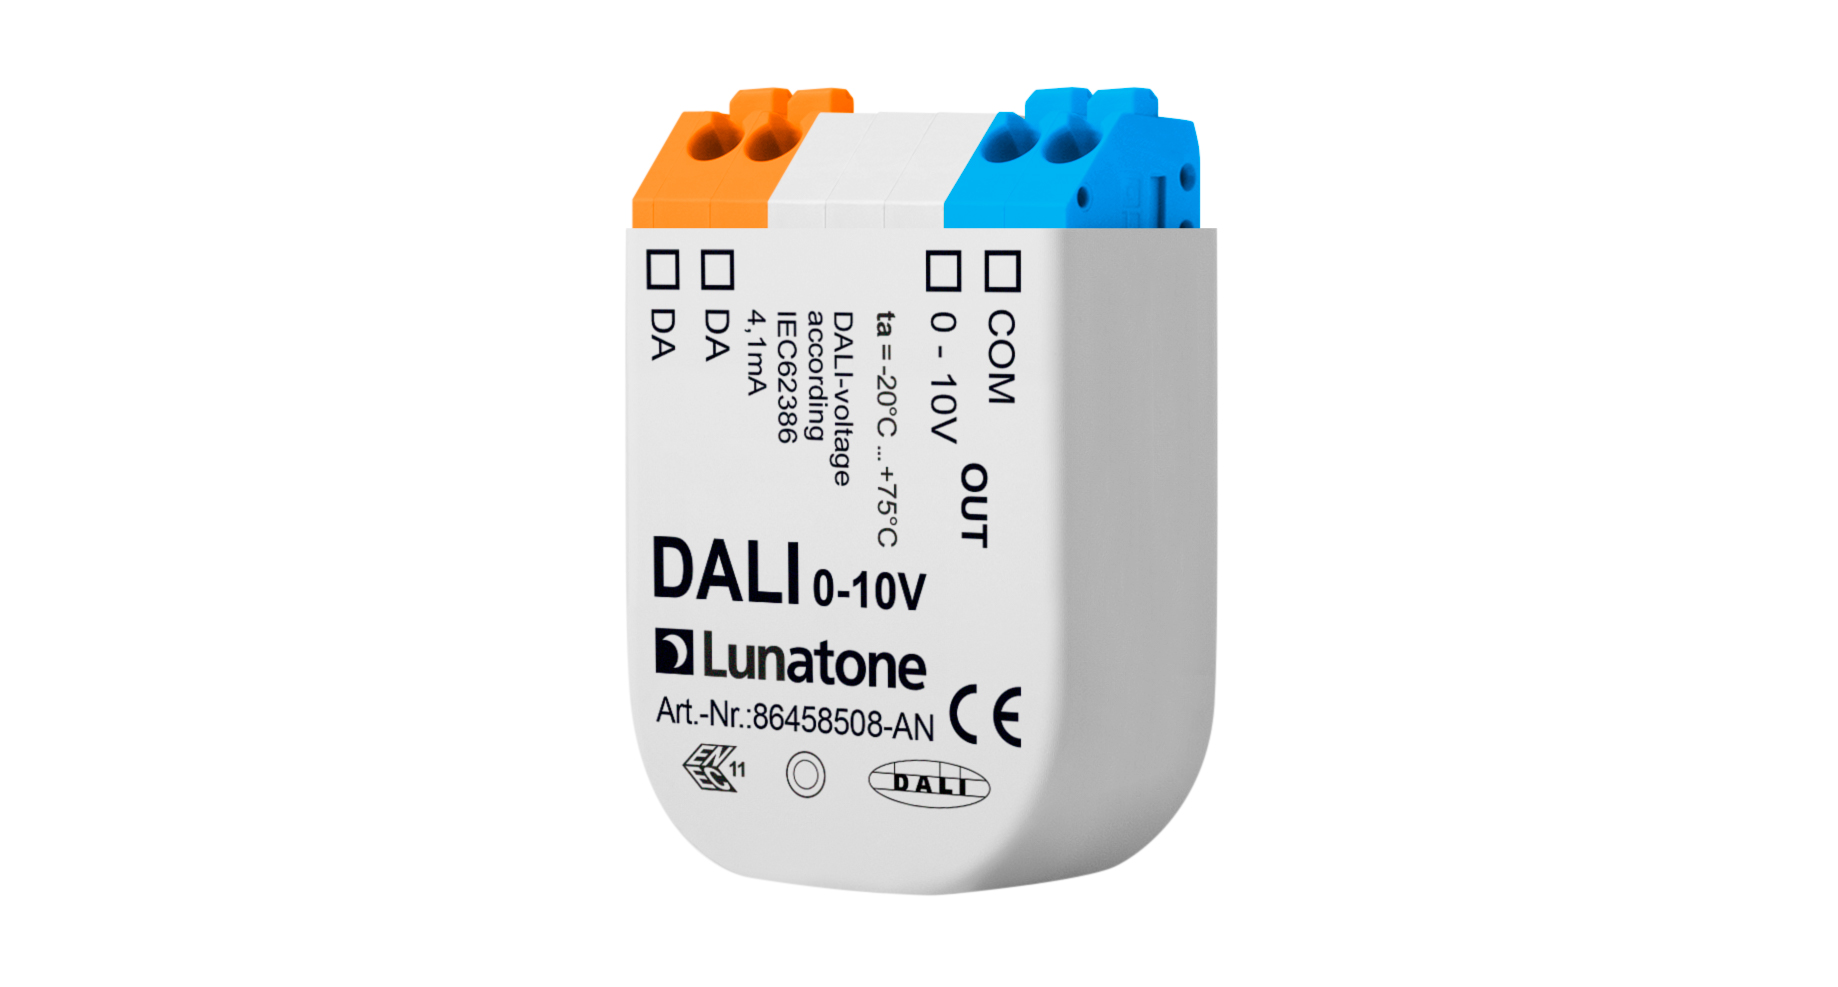 DALI 0-10V AN - Lunatone